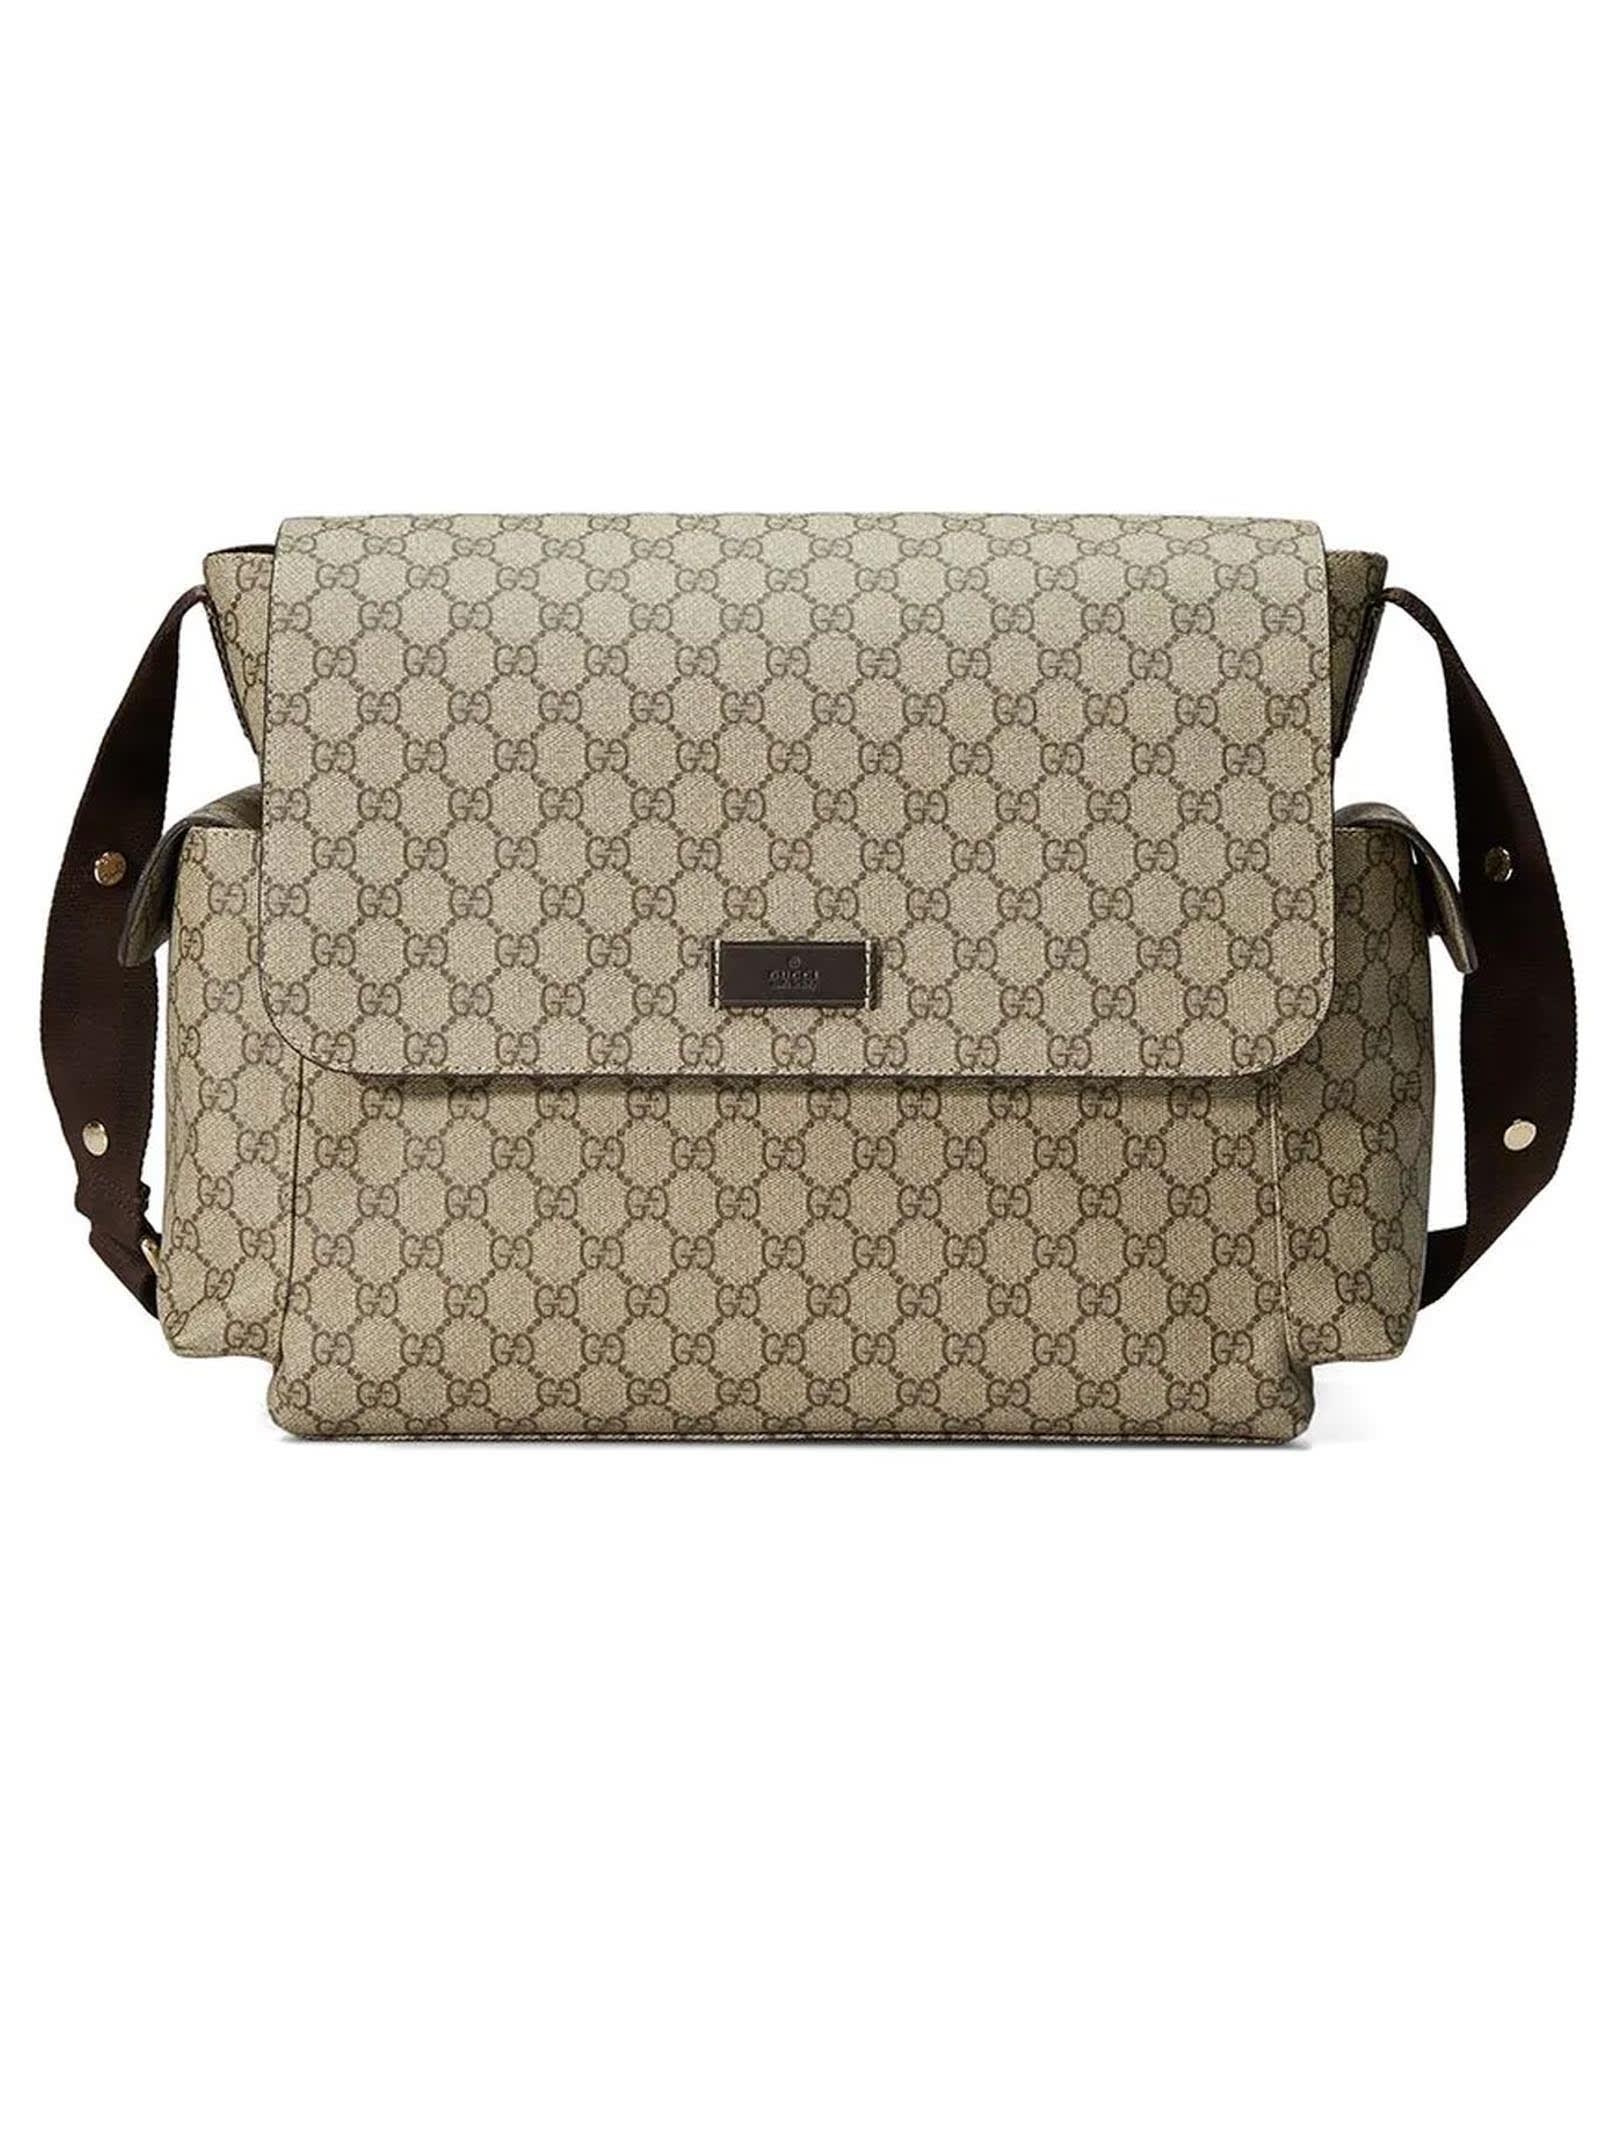 Gucci Beige Leather Bag